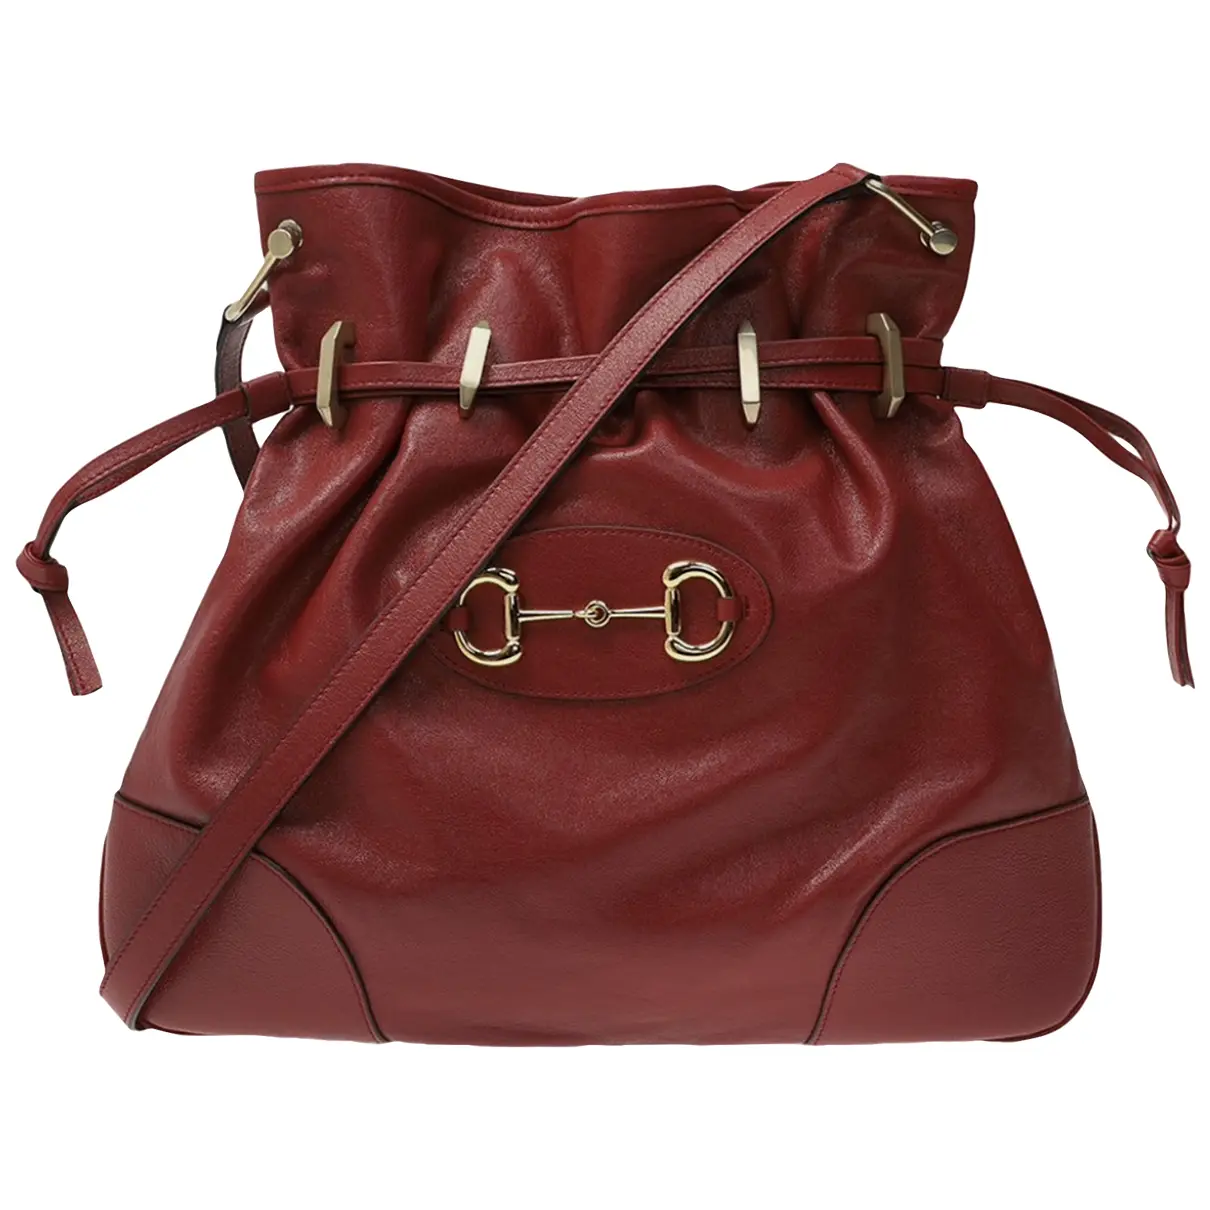 Horsebit 1955 Messenger leather handbag